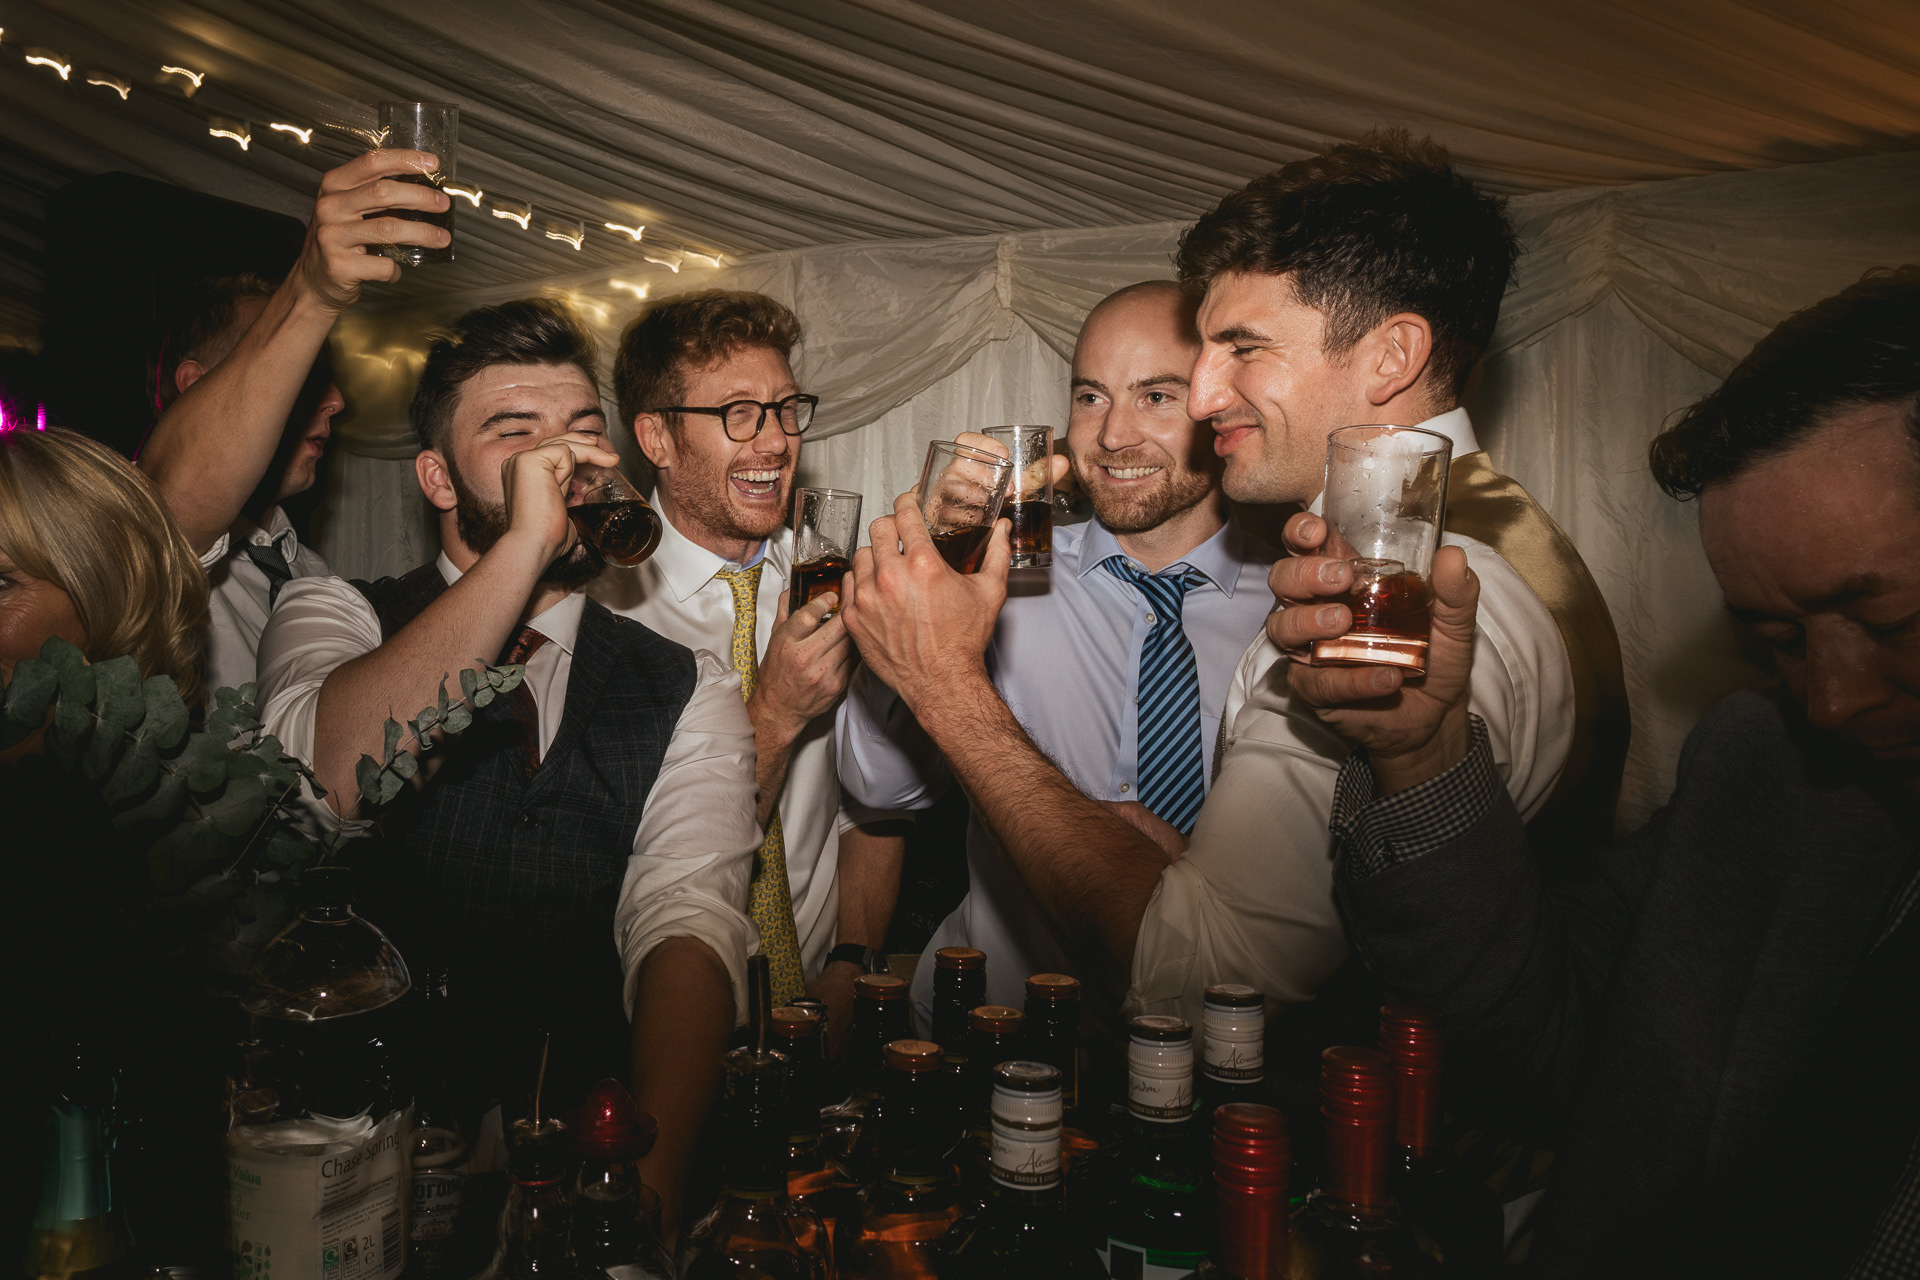 Group of men drinking shots